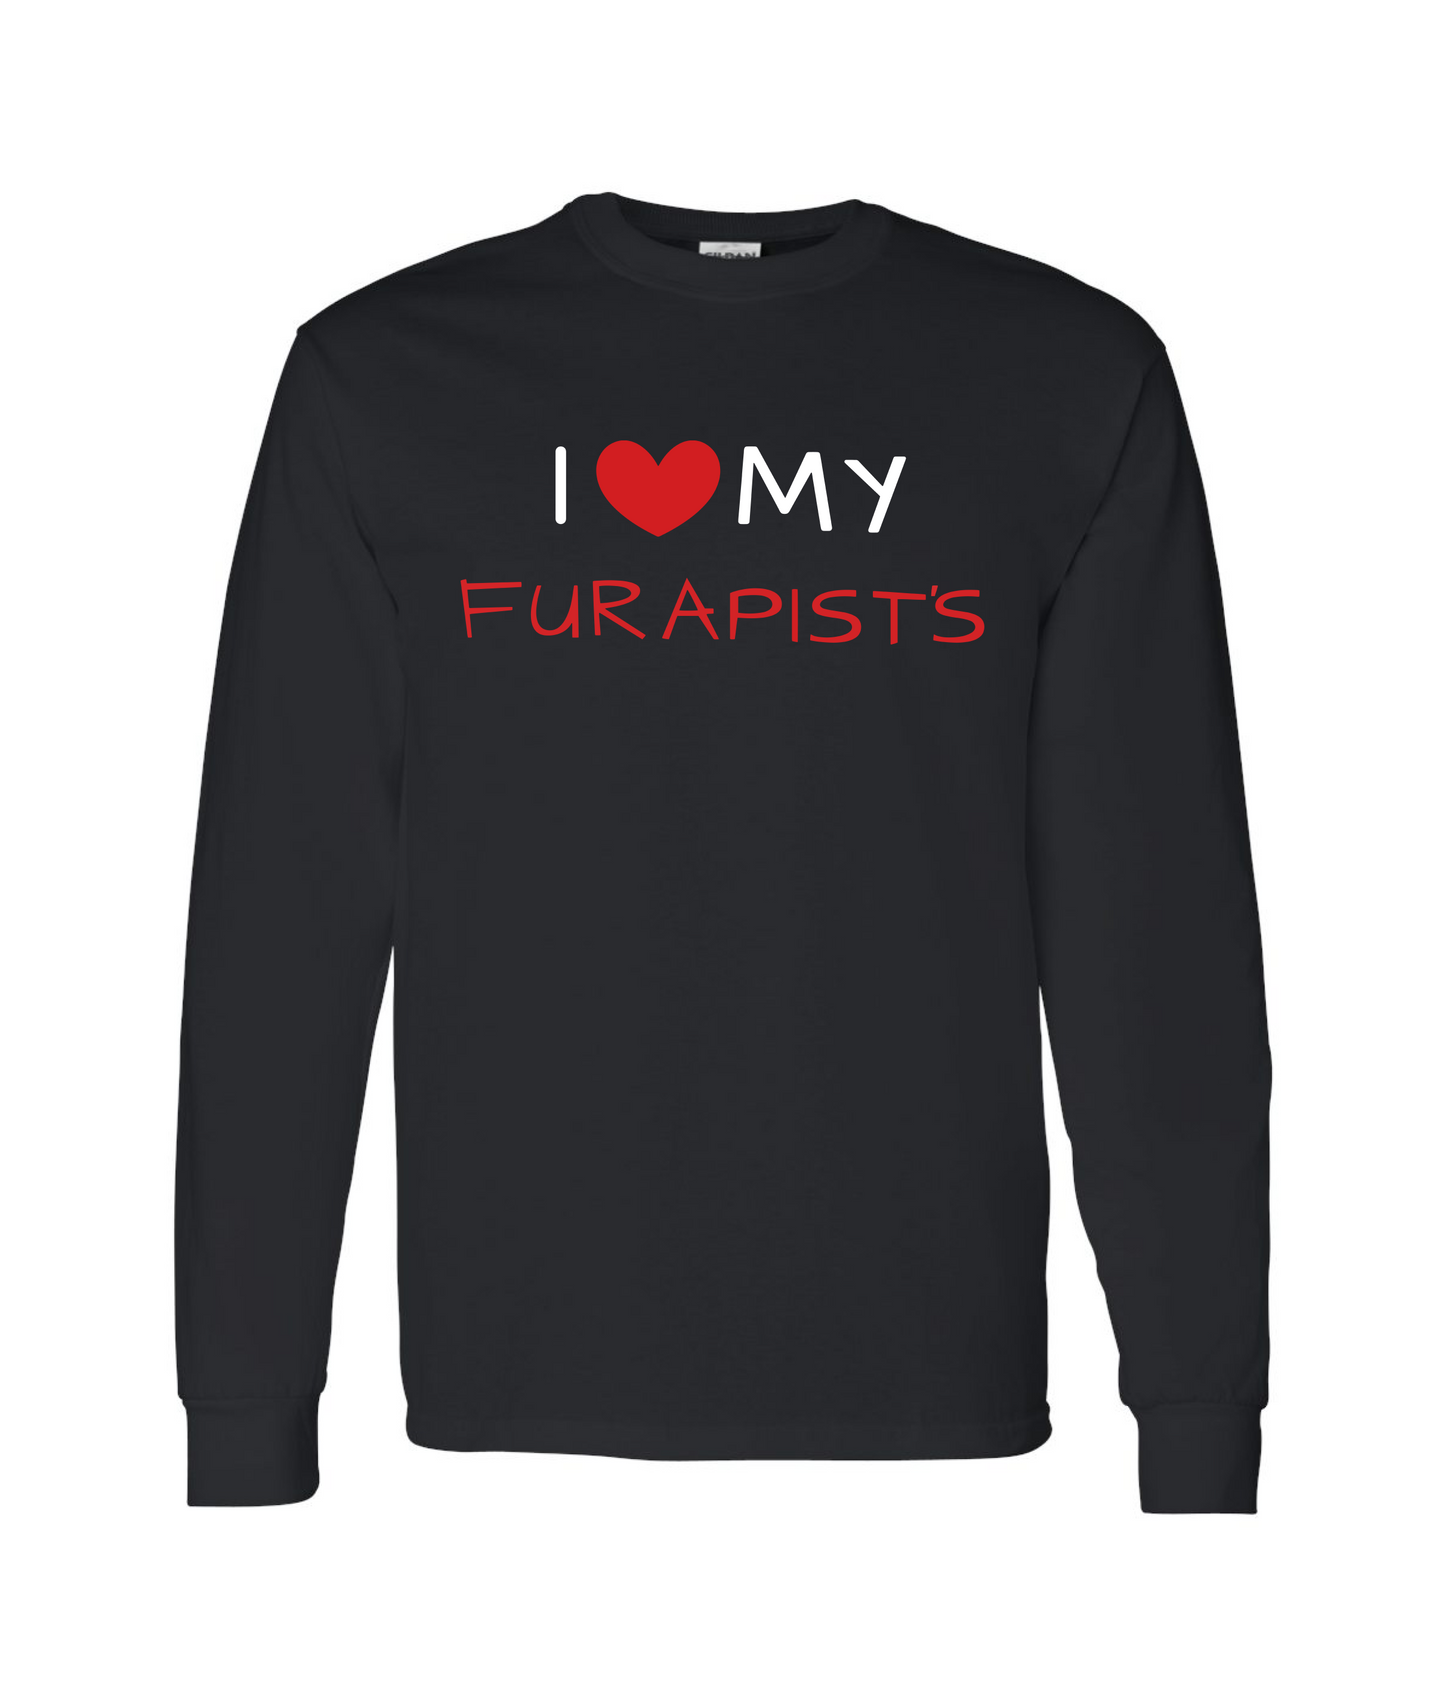 pyschofurapy.com - I <3 MY FURAPIST'S - Black Long Sleeve T